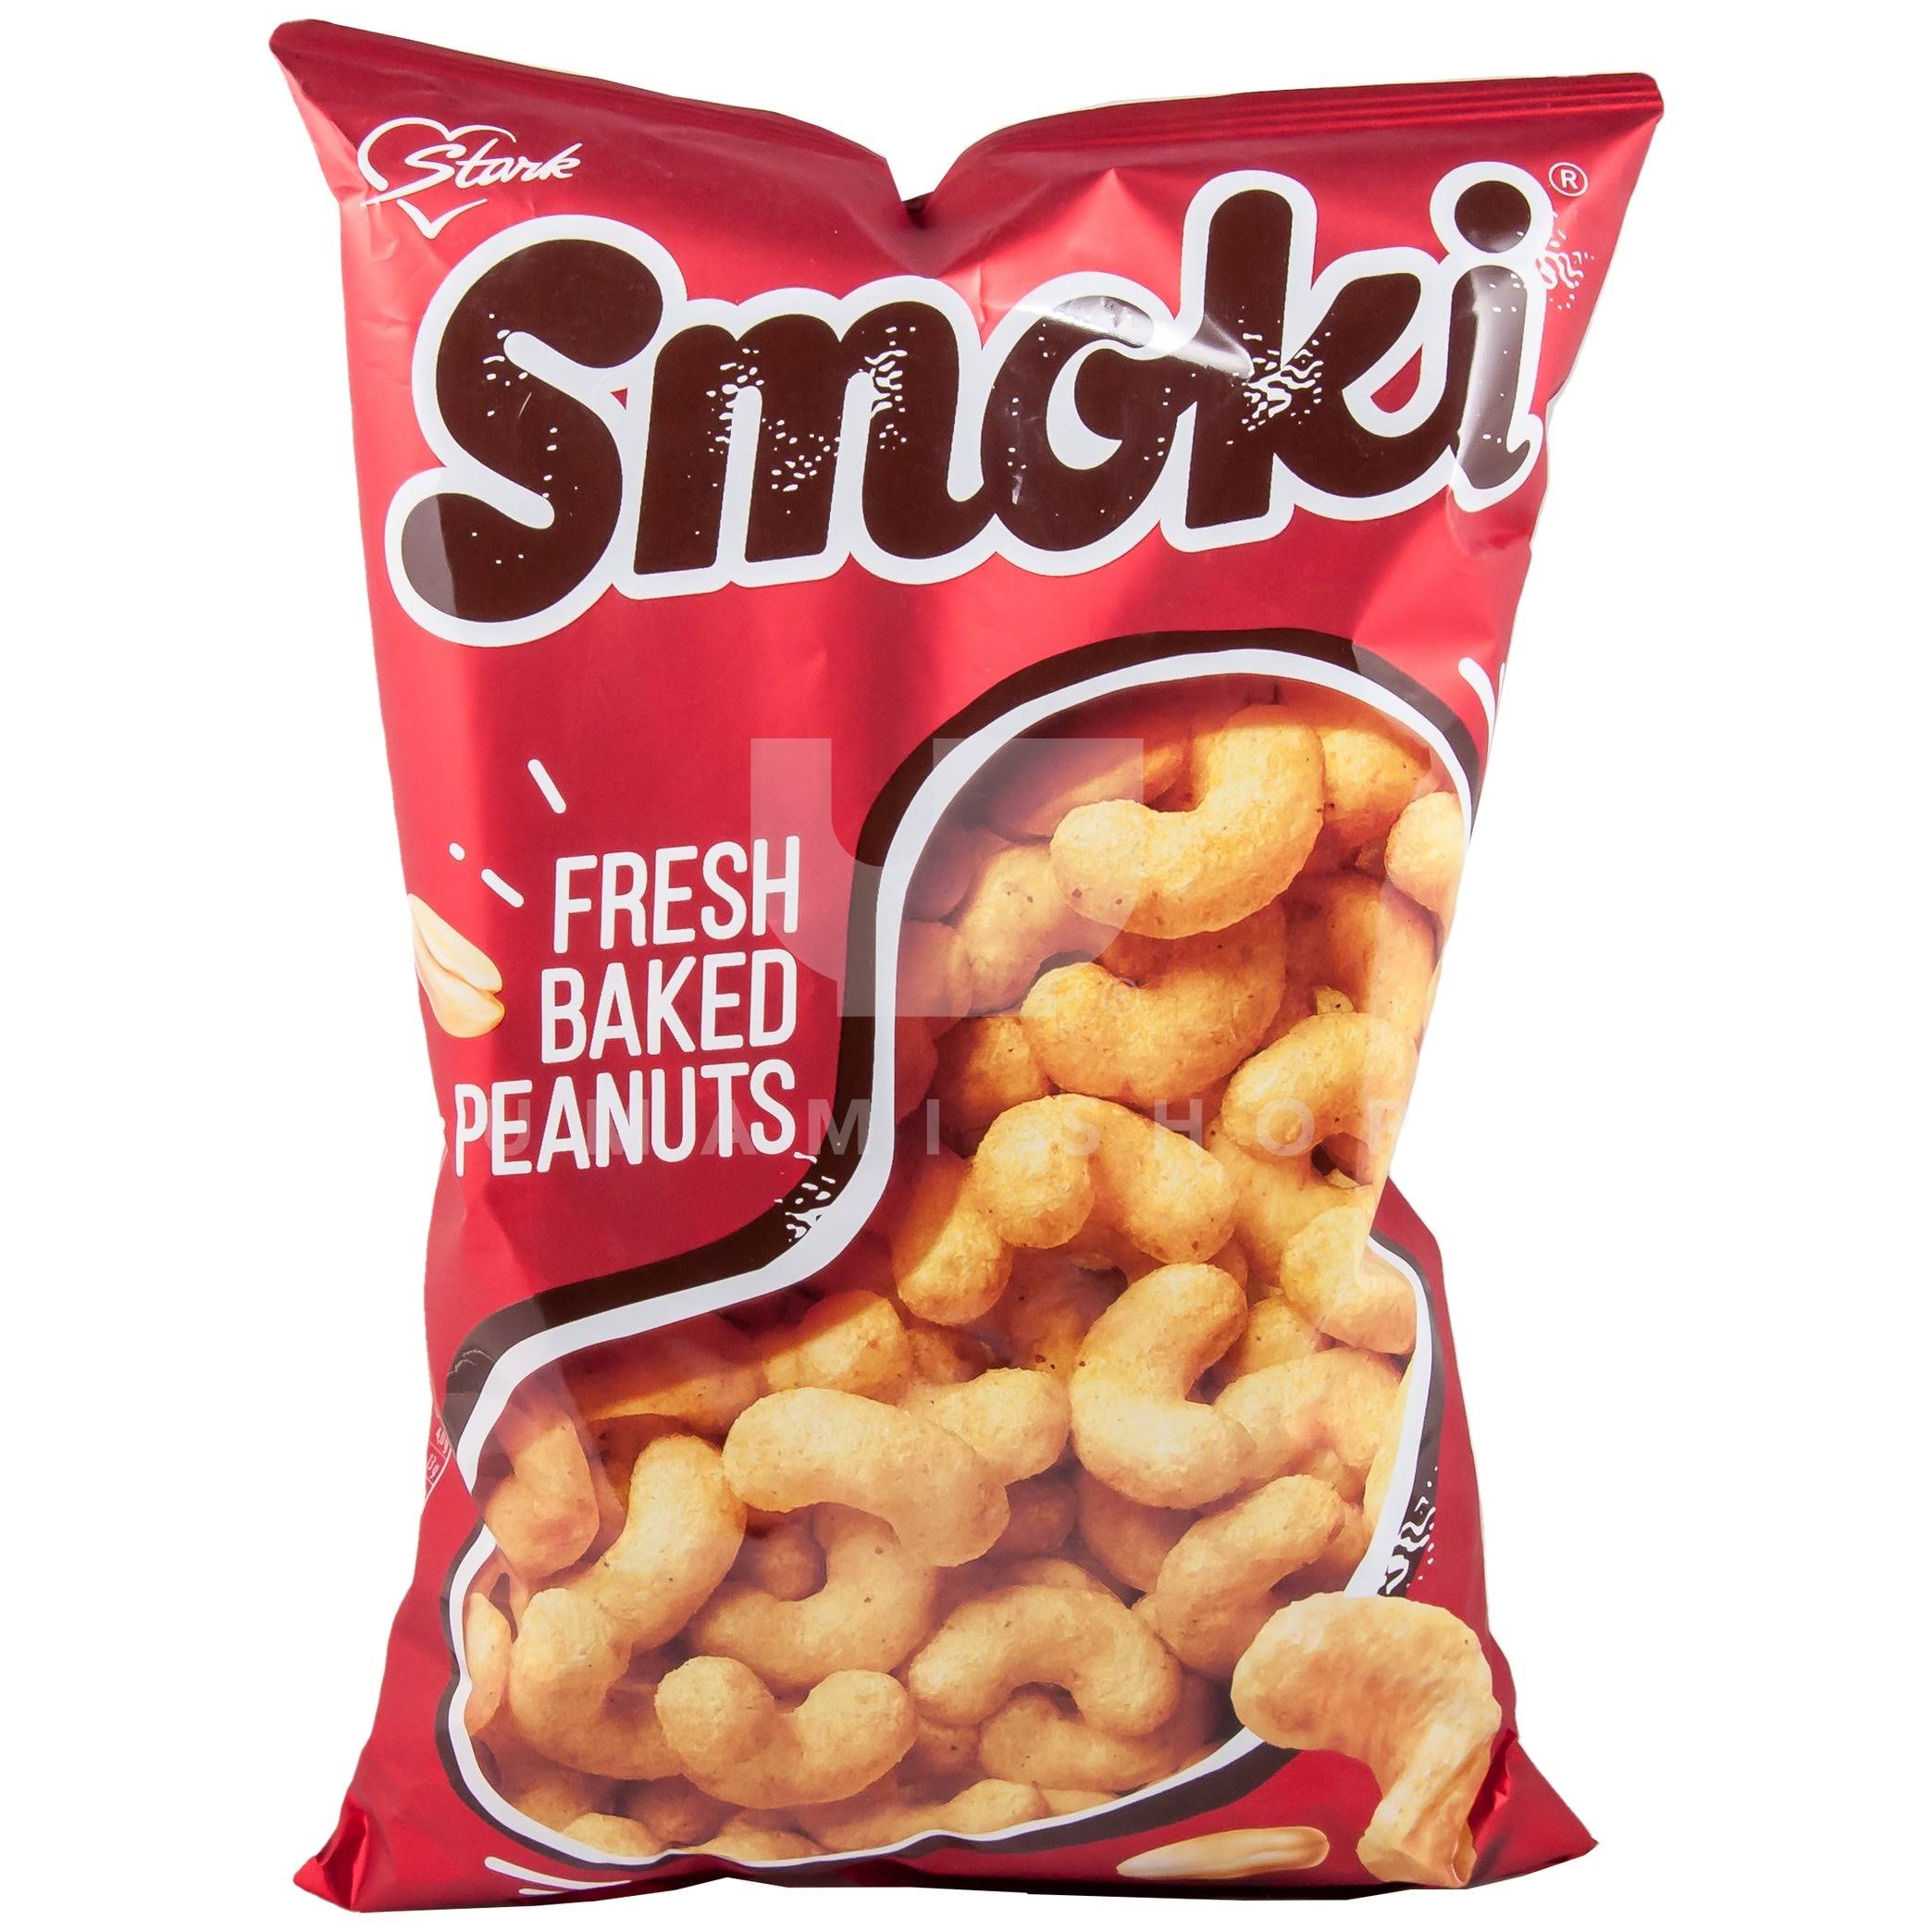 Stark Smoki Flips Puff Snack - 150g